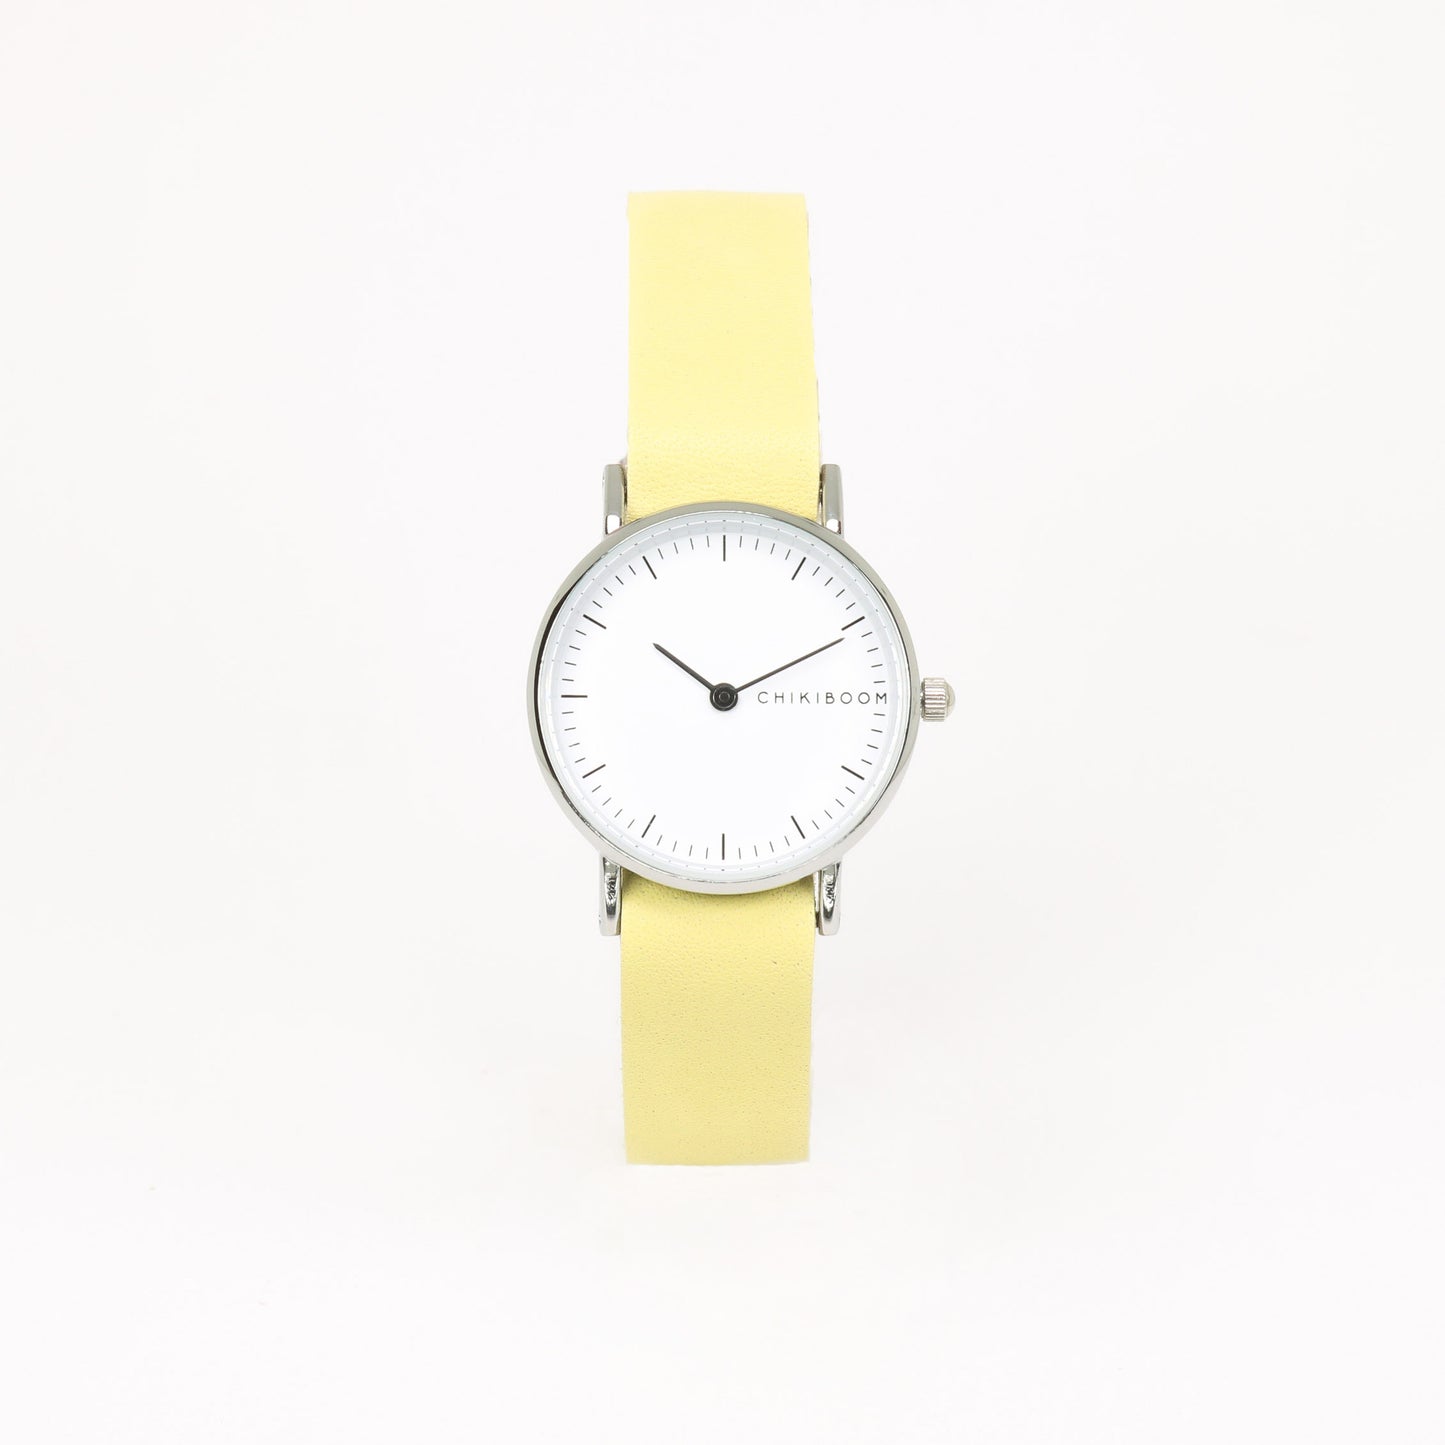 Pale yellow / white women's watch